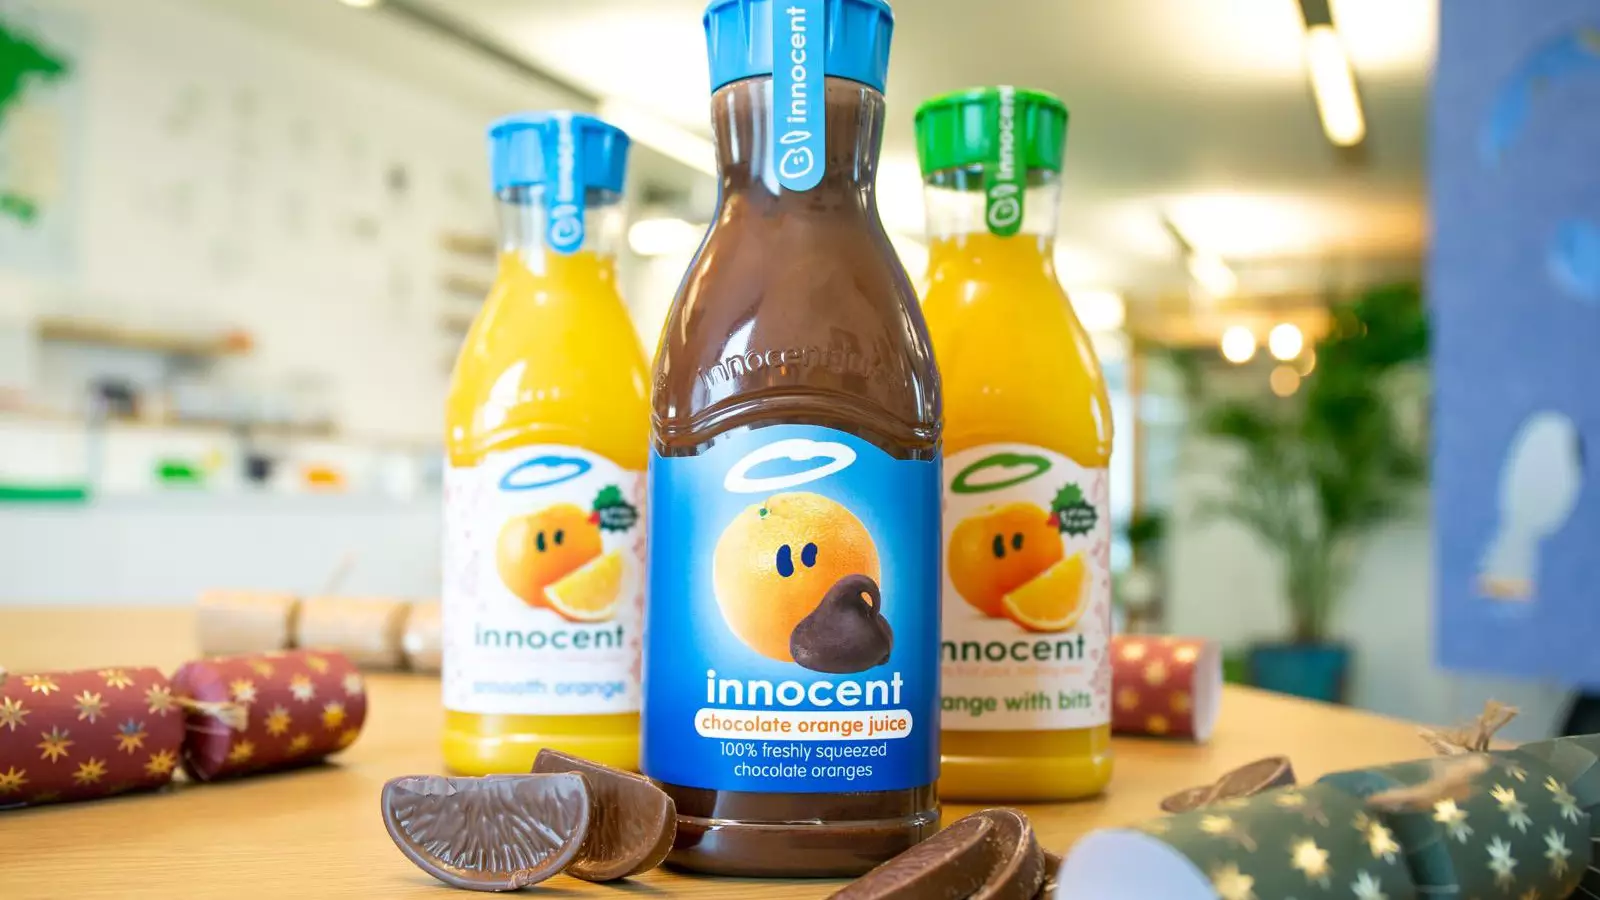 Innocent Drinks Trolls Followers With 'Chocolate Orange Juice' For Christmas 